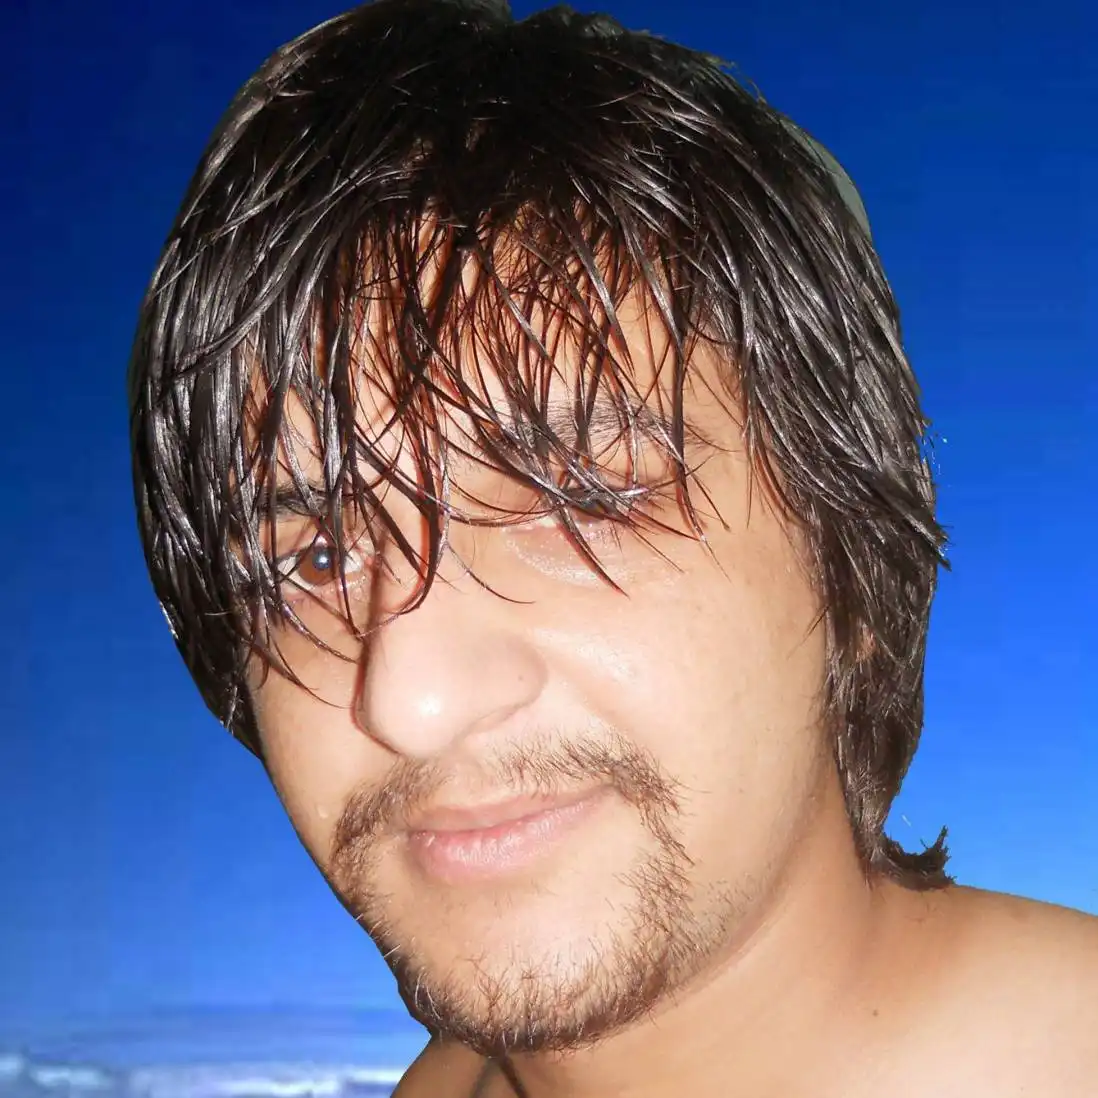 prakash profile image